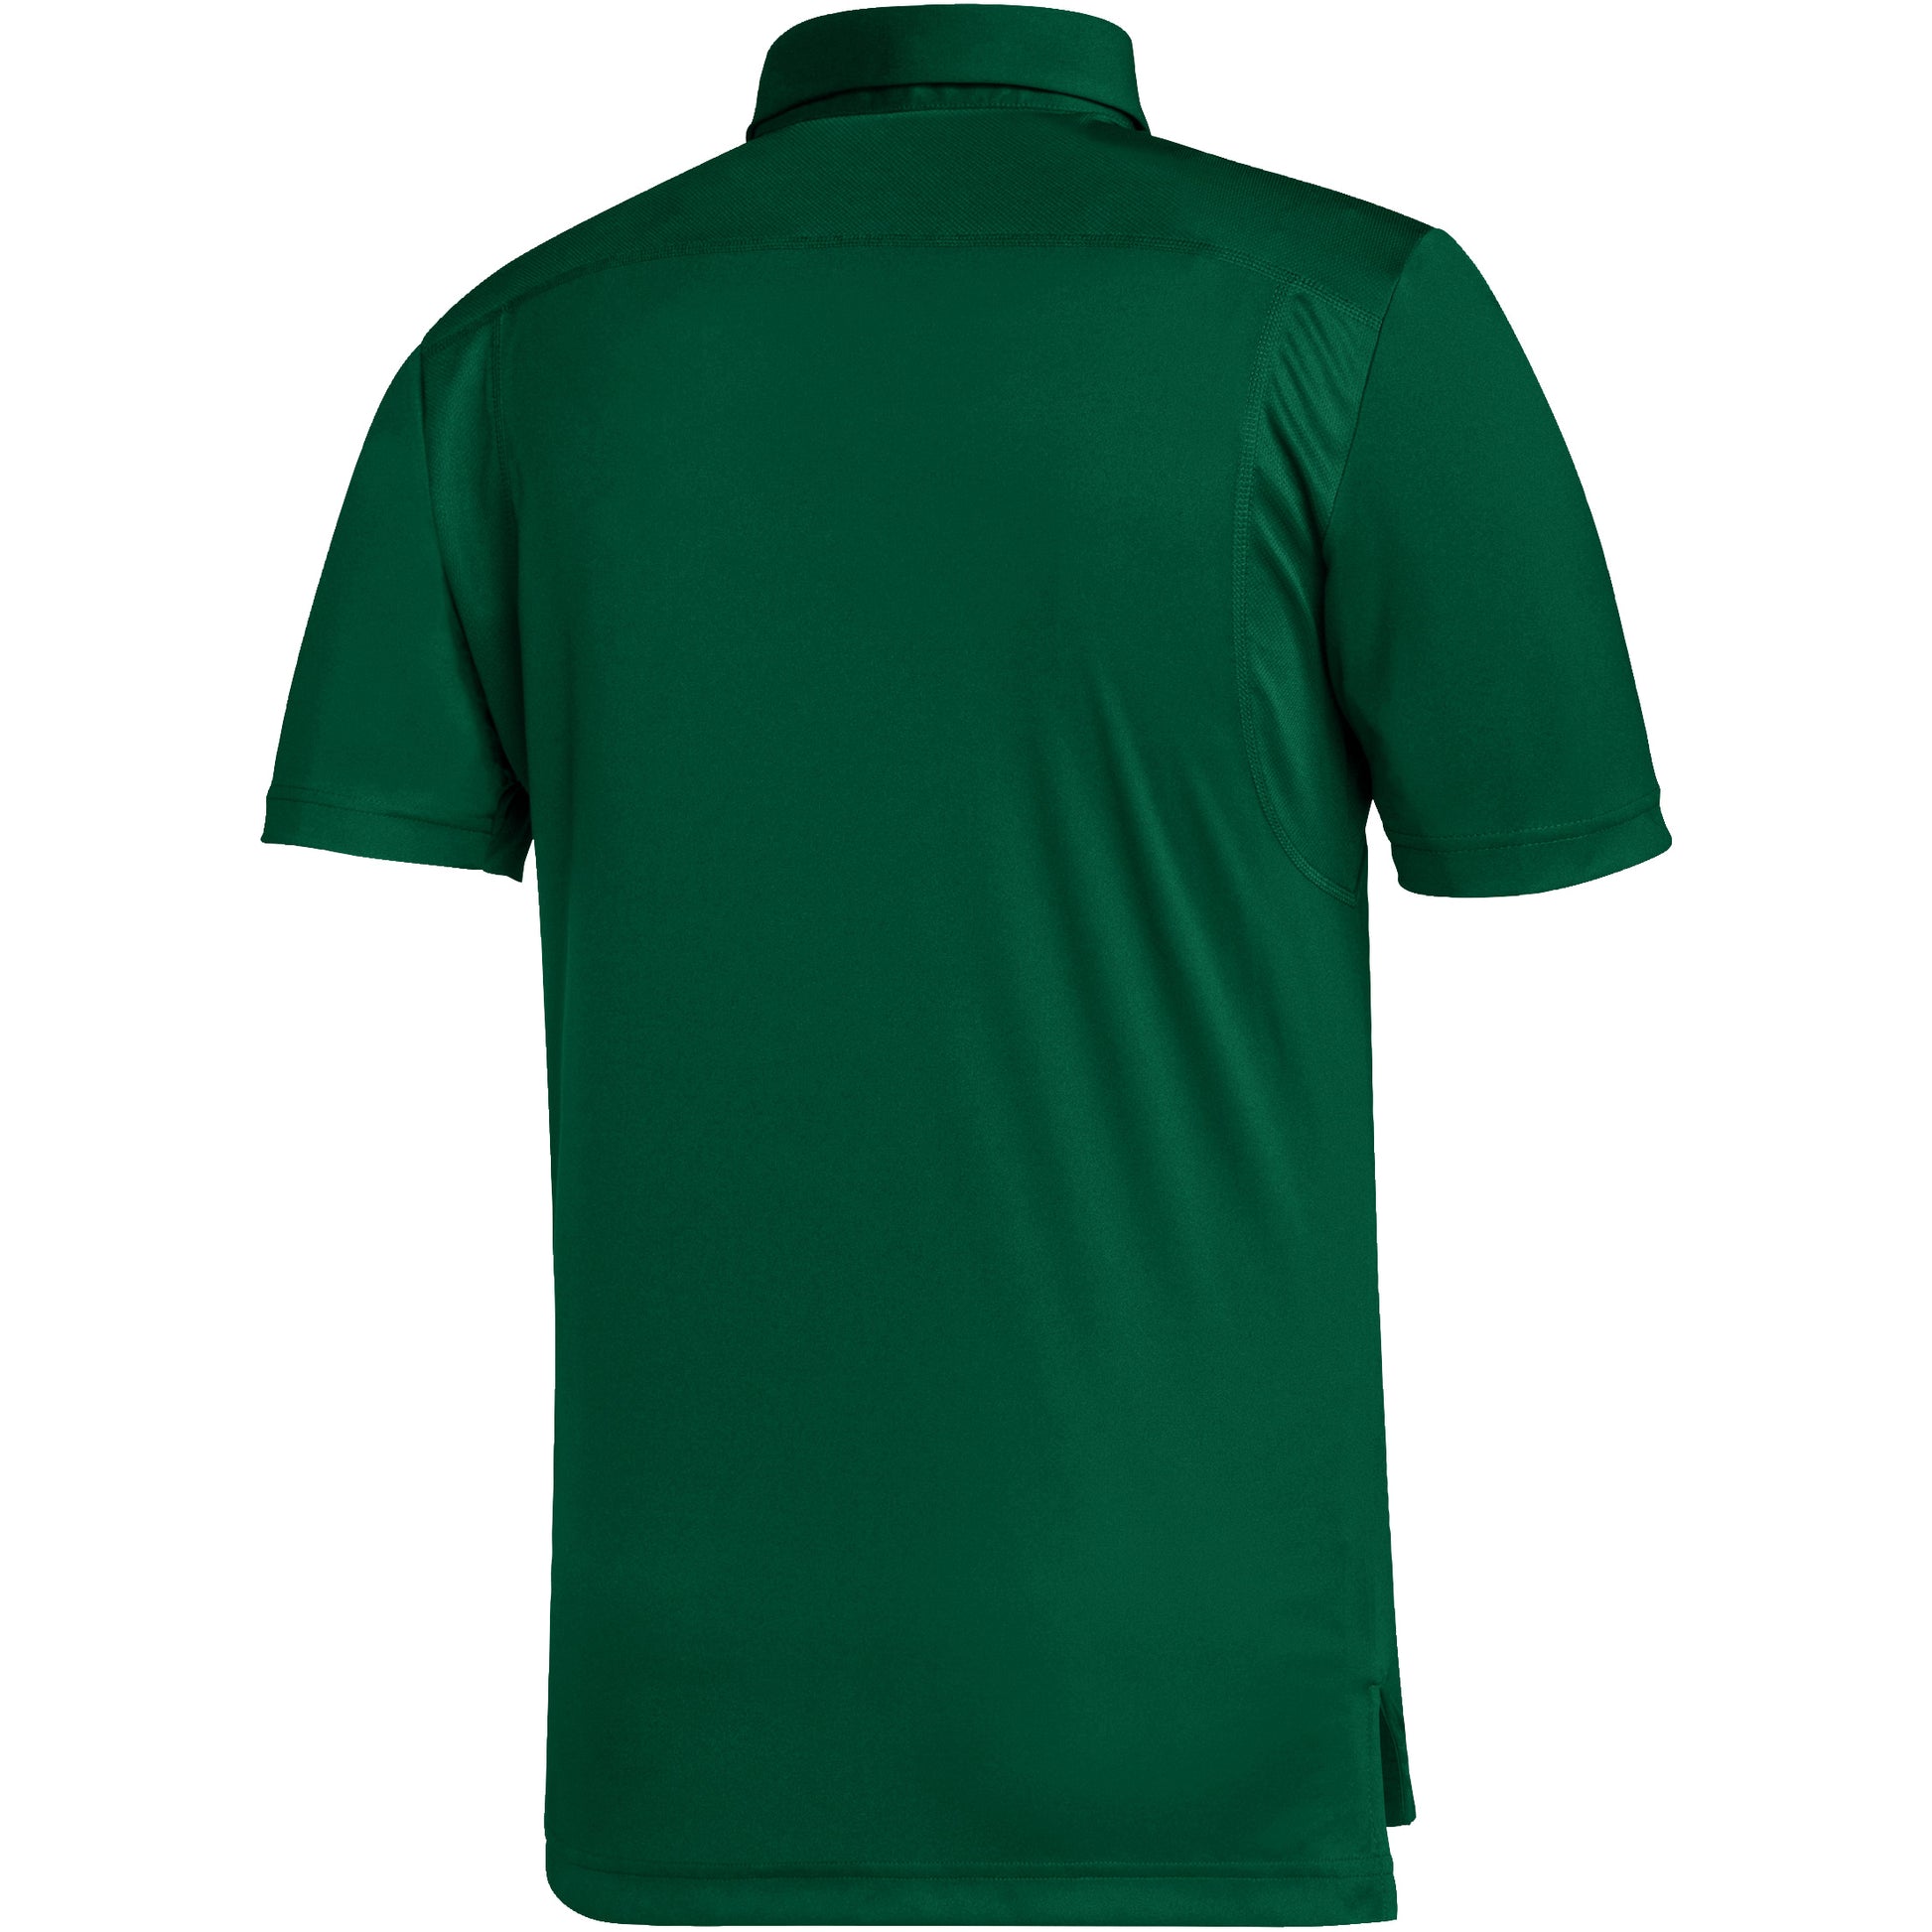 Team USA Golf Shirt. Seriously Fantastic Polos. Only $39.95